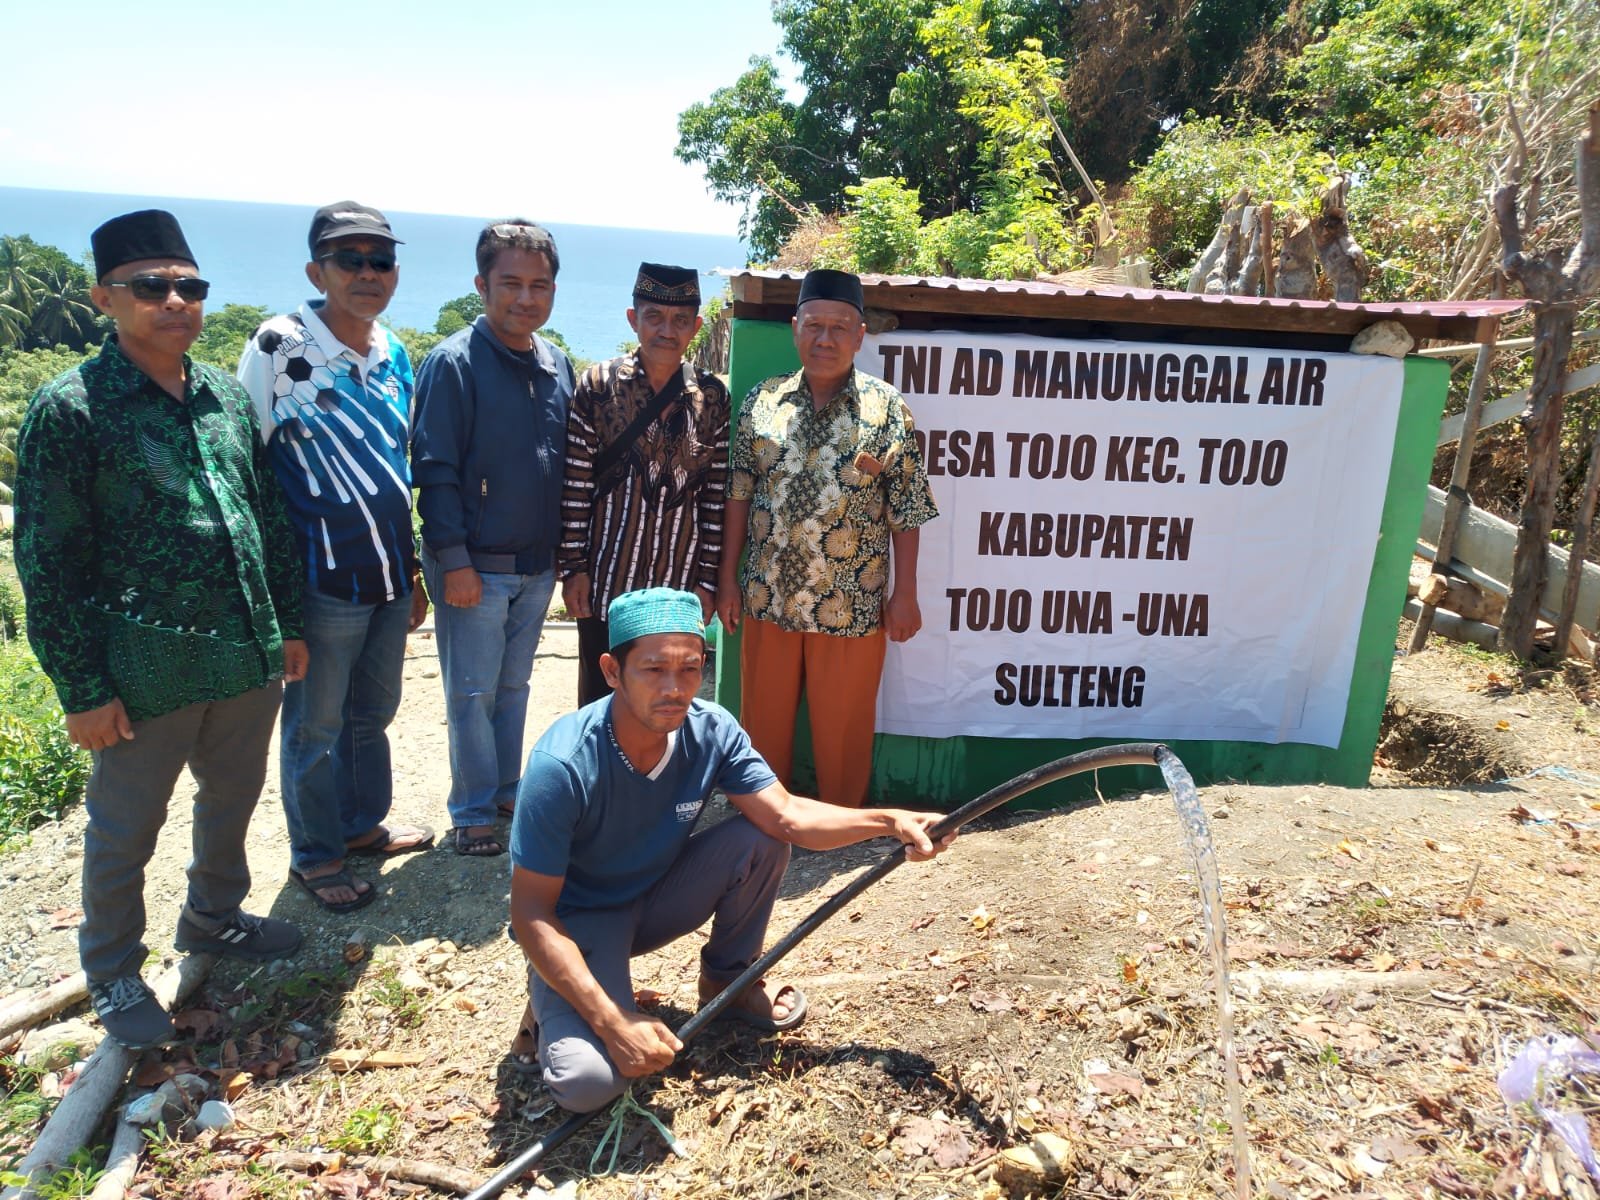 Bantuan Air Bersih dari Program TNI-AD Manunggal Air Atasi Masalah Air Bersih di Tojo Unauna